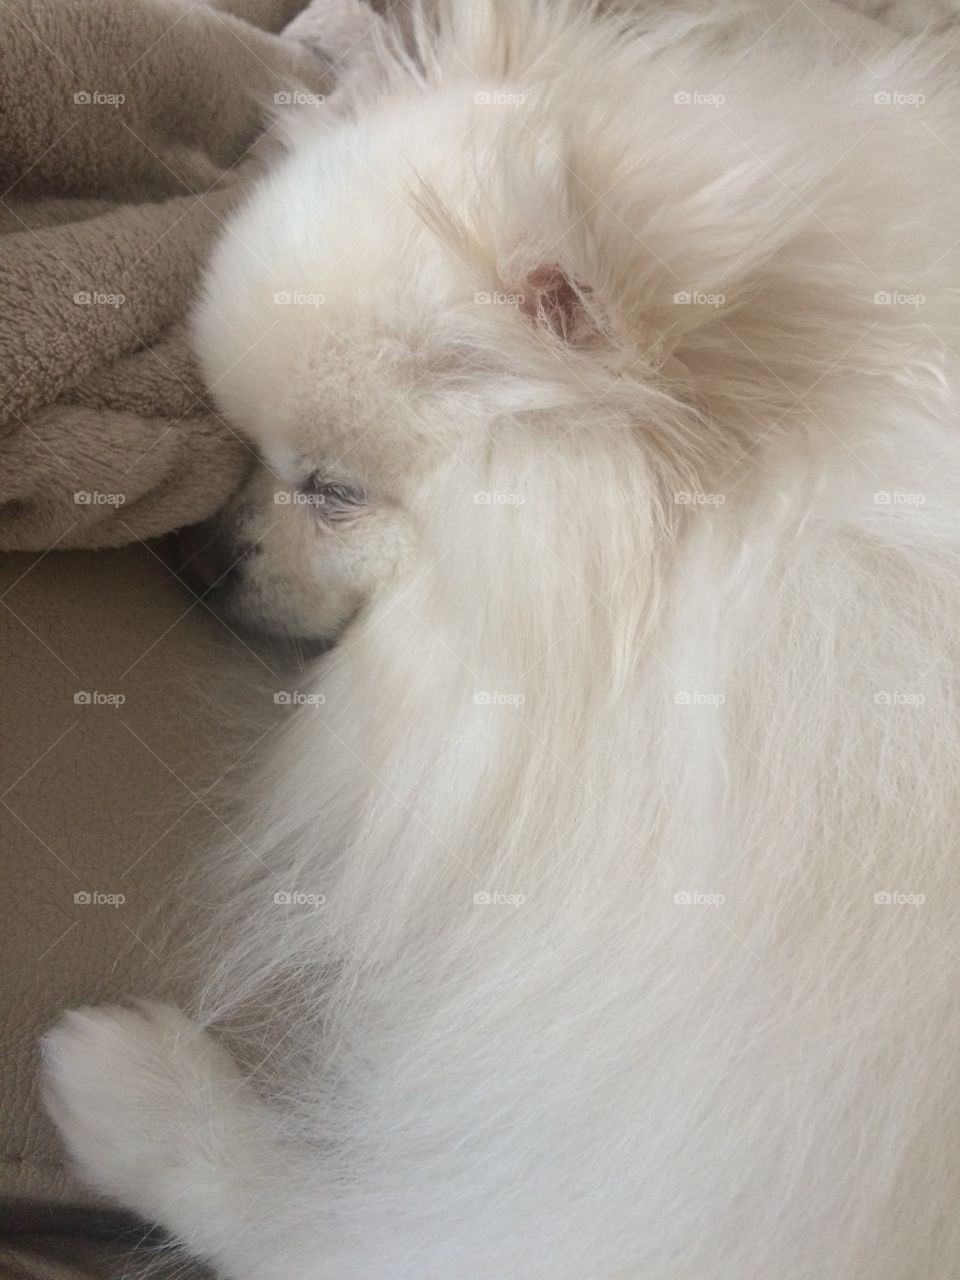 Sleeping Pomeranian 